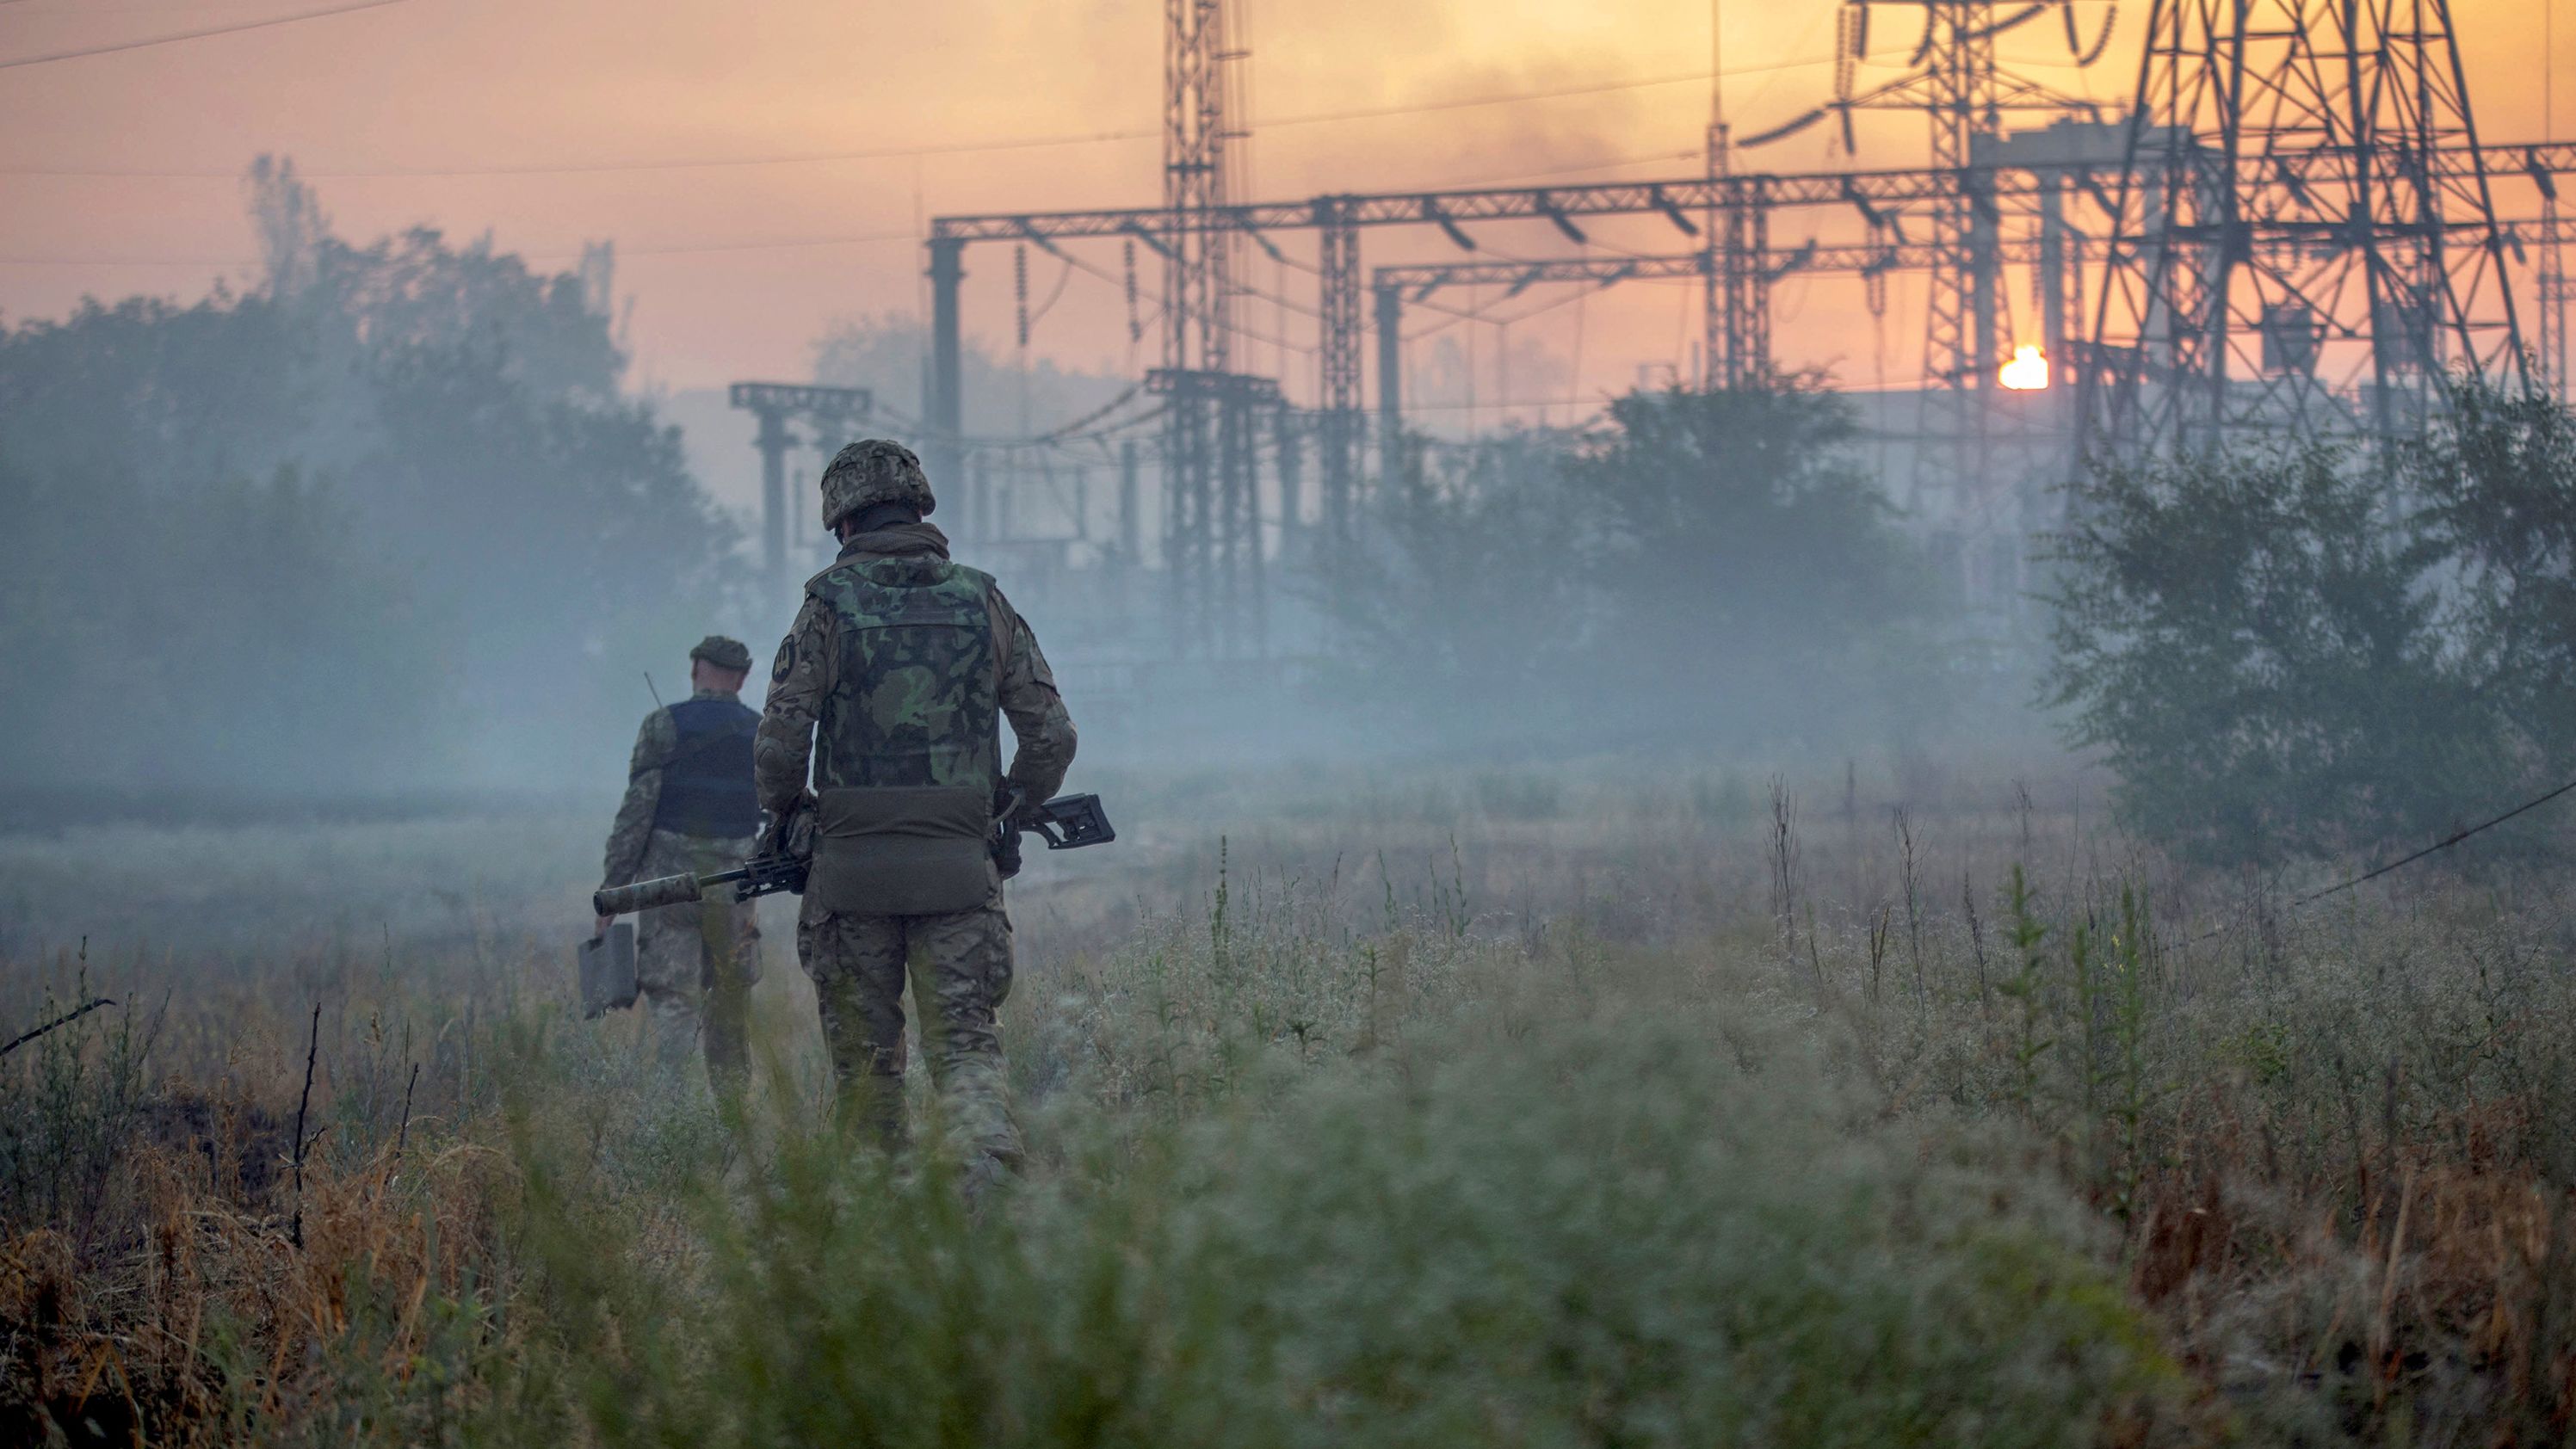 Ukrainian service members patrol an area in the city of <a href="https://edition.cnn.com/2022/06/25/europe/russia-invasion-ukraine-06-25-intl/index.html" target="_blank">Severodonetsk</a>, Ukraine, on June 20.